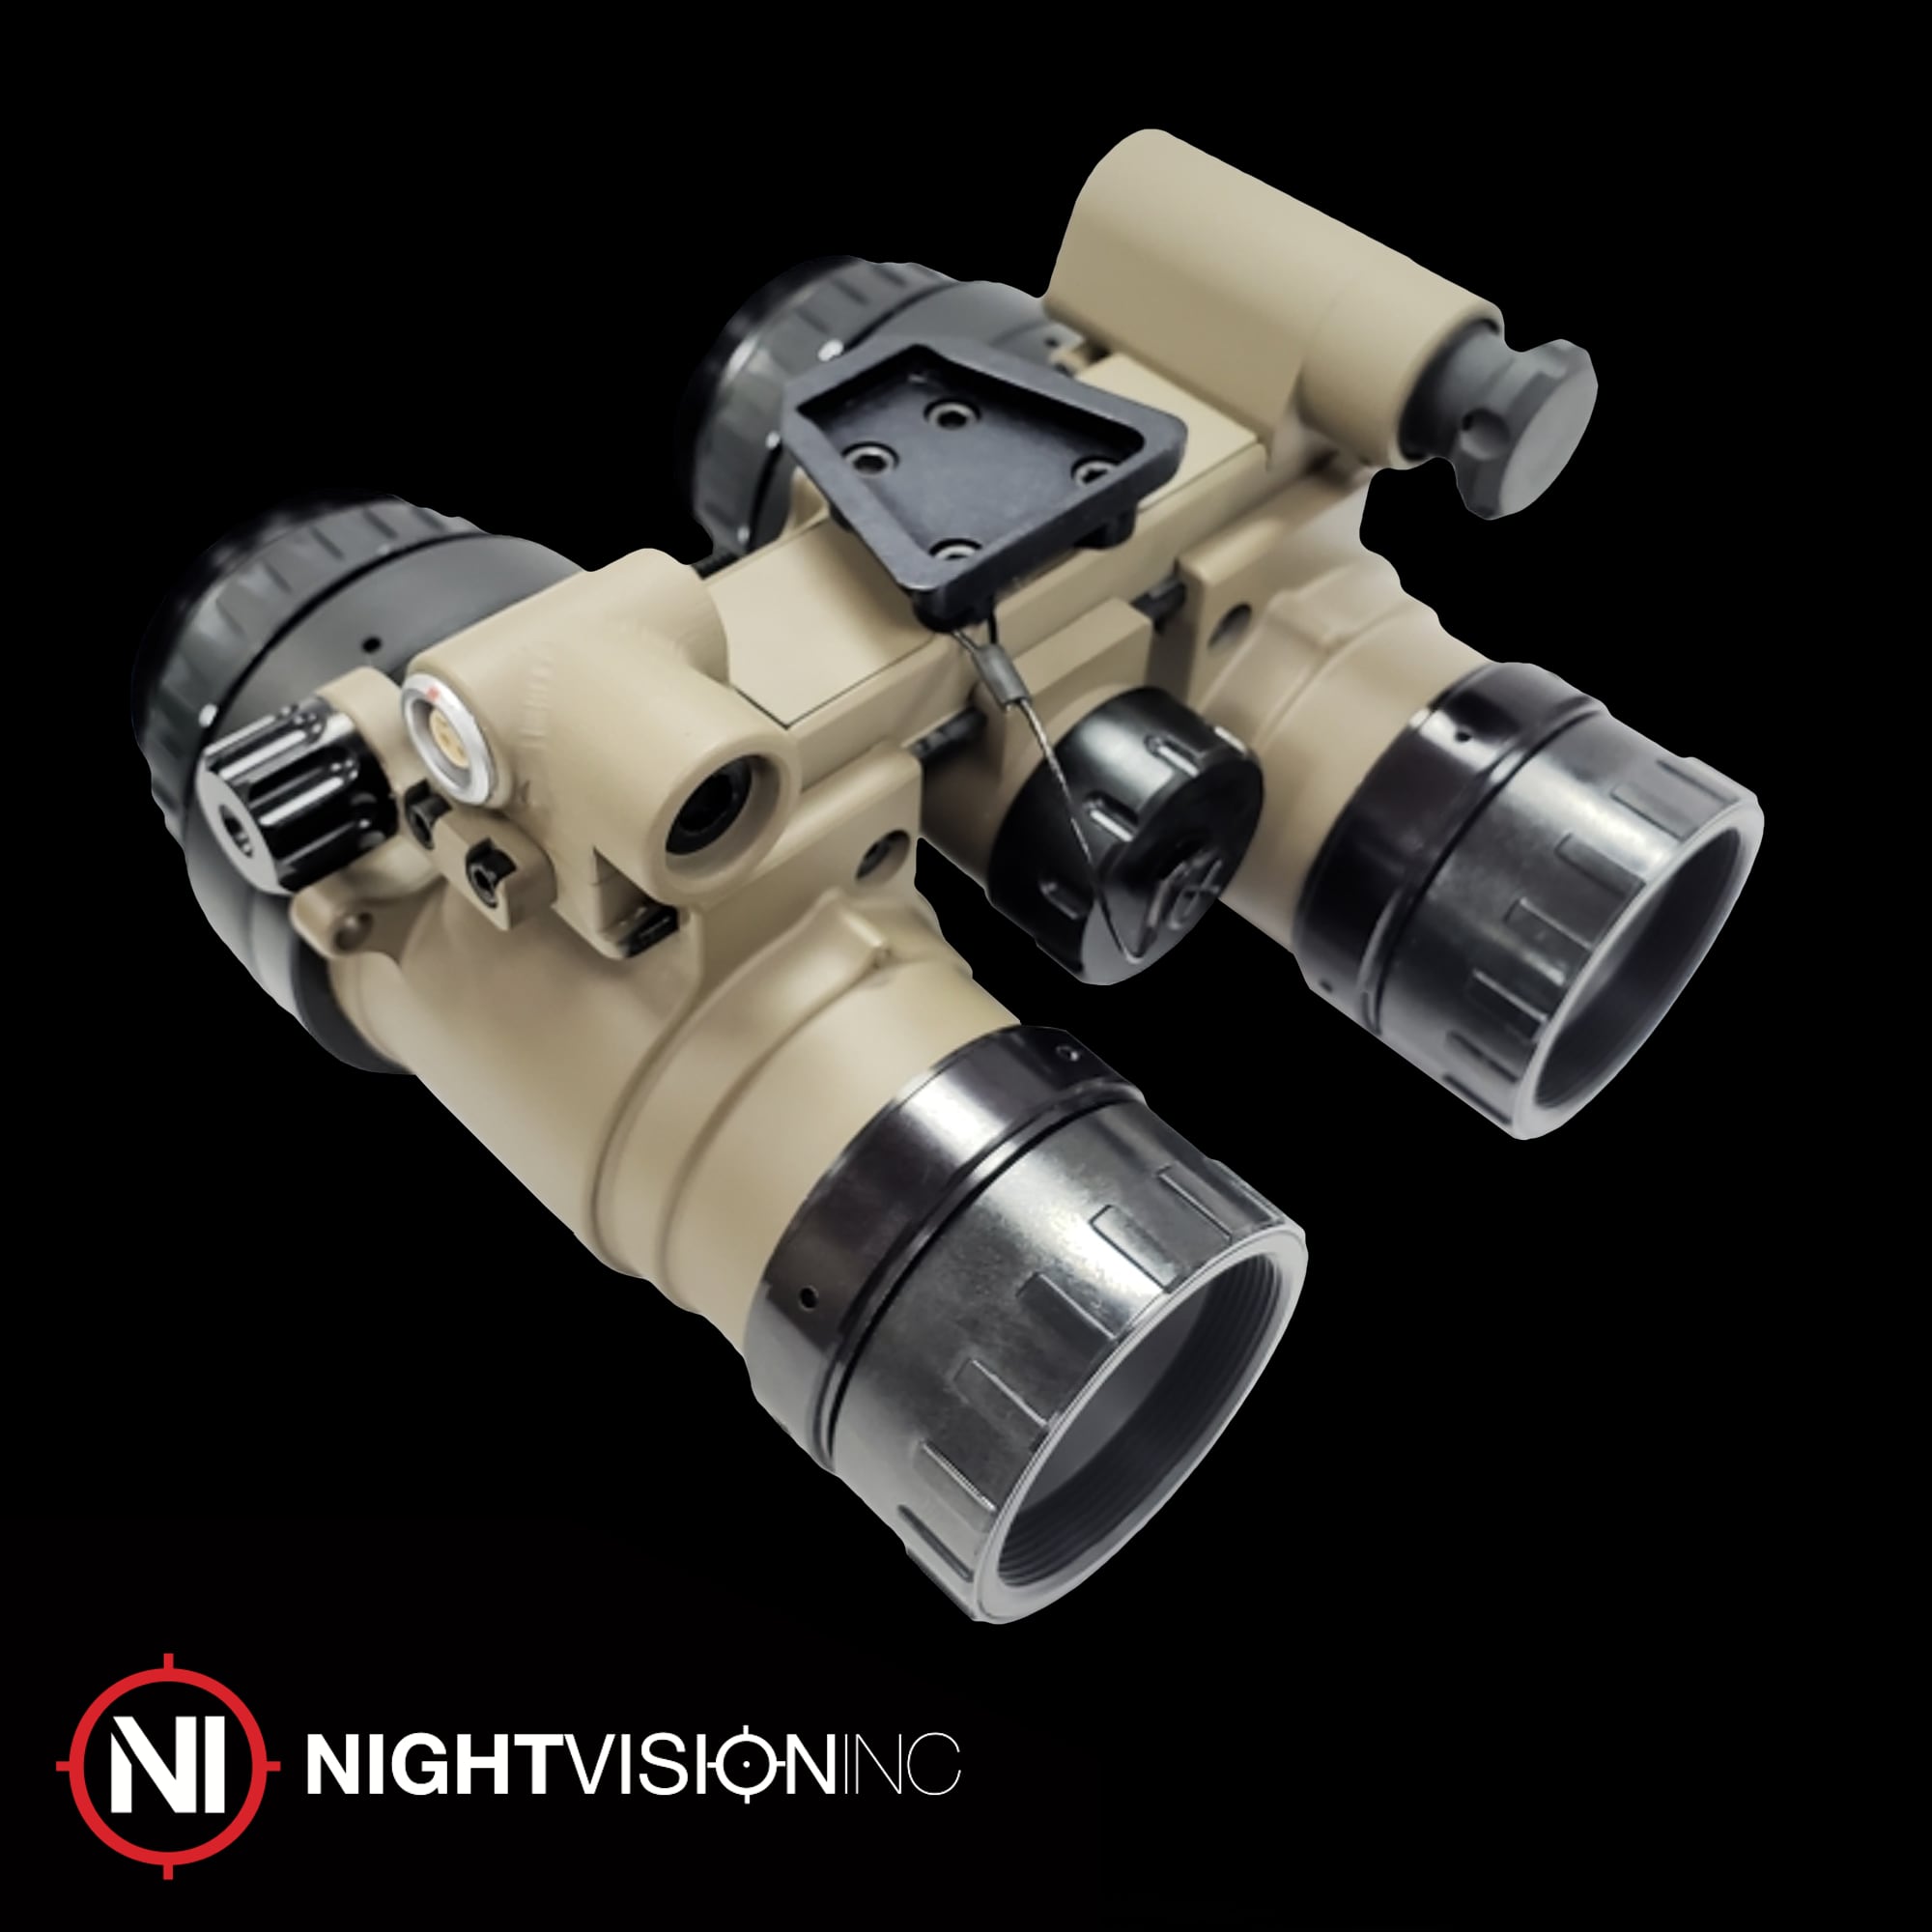 RNVG (Ruggedized Night Vision Goggle)